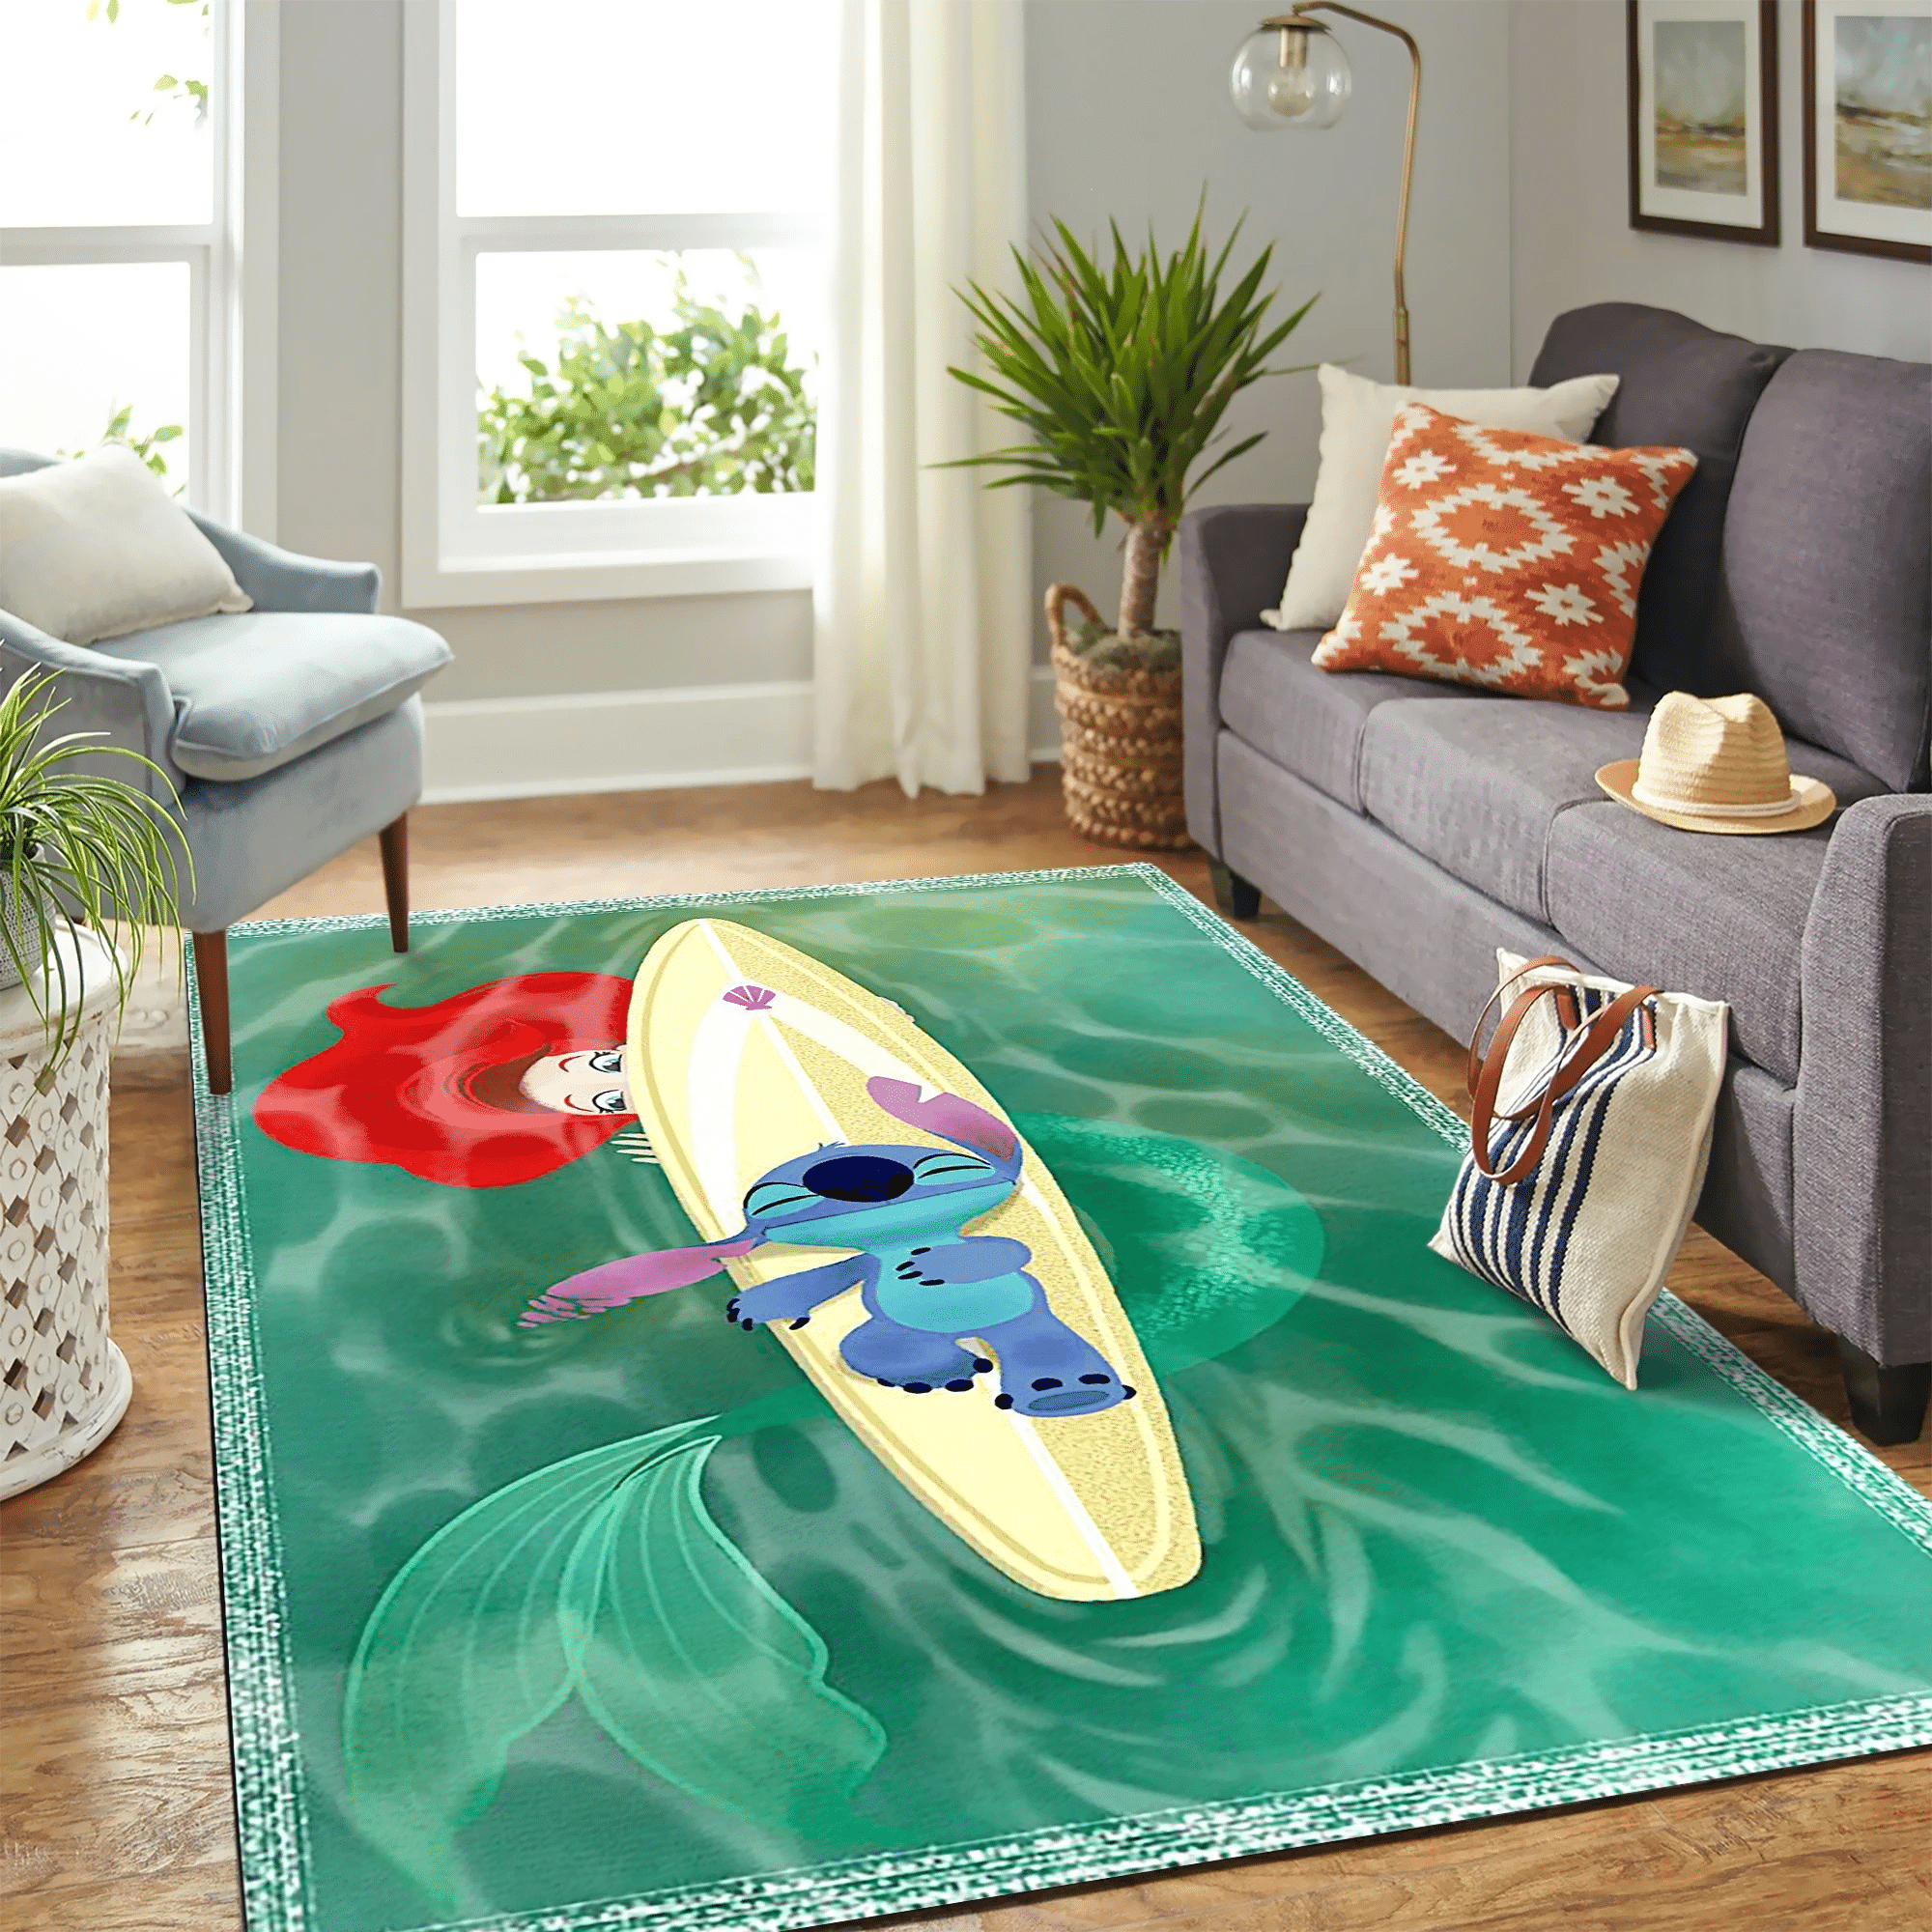 Stitch And Mermaid Cute Carpet Floor Area Rug Chrismas Gift – Indoor Outdoor Rugs